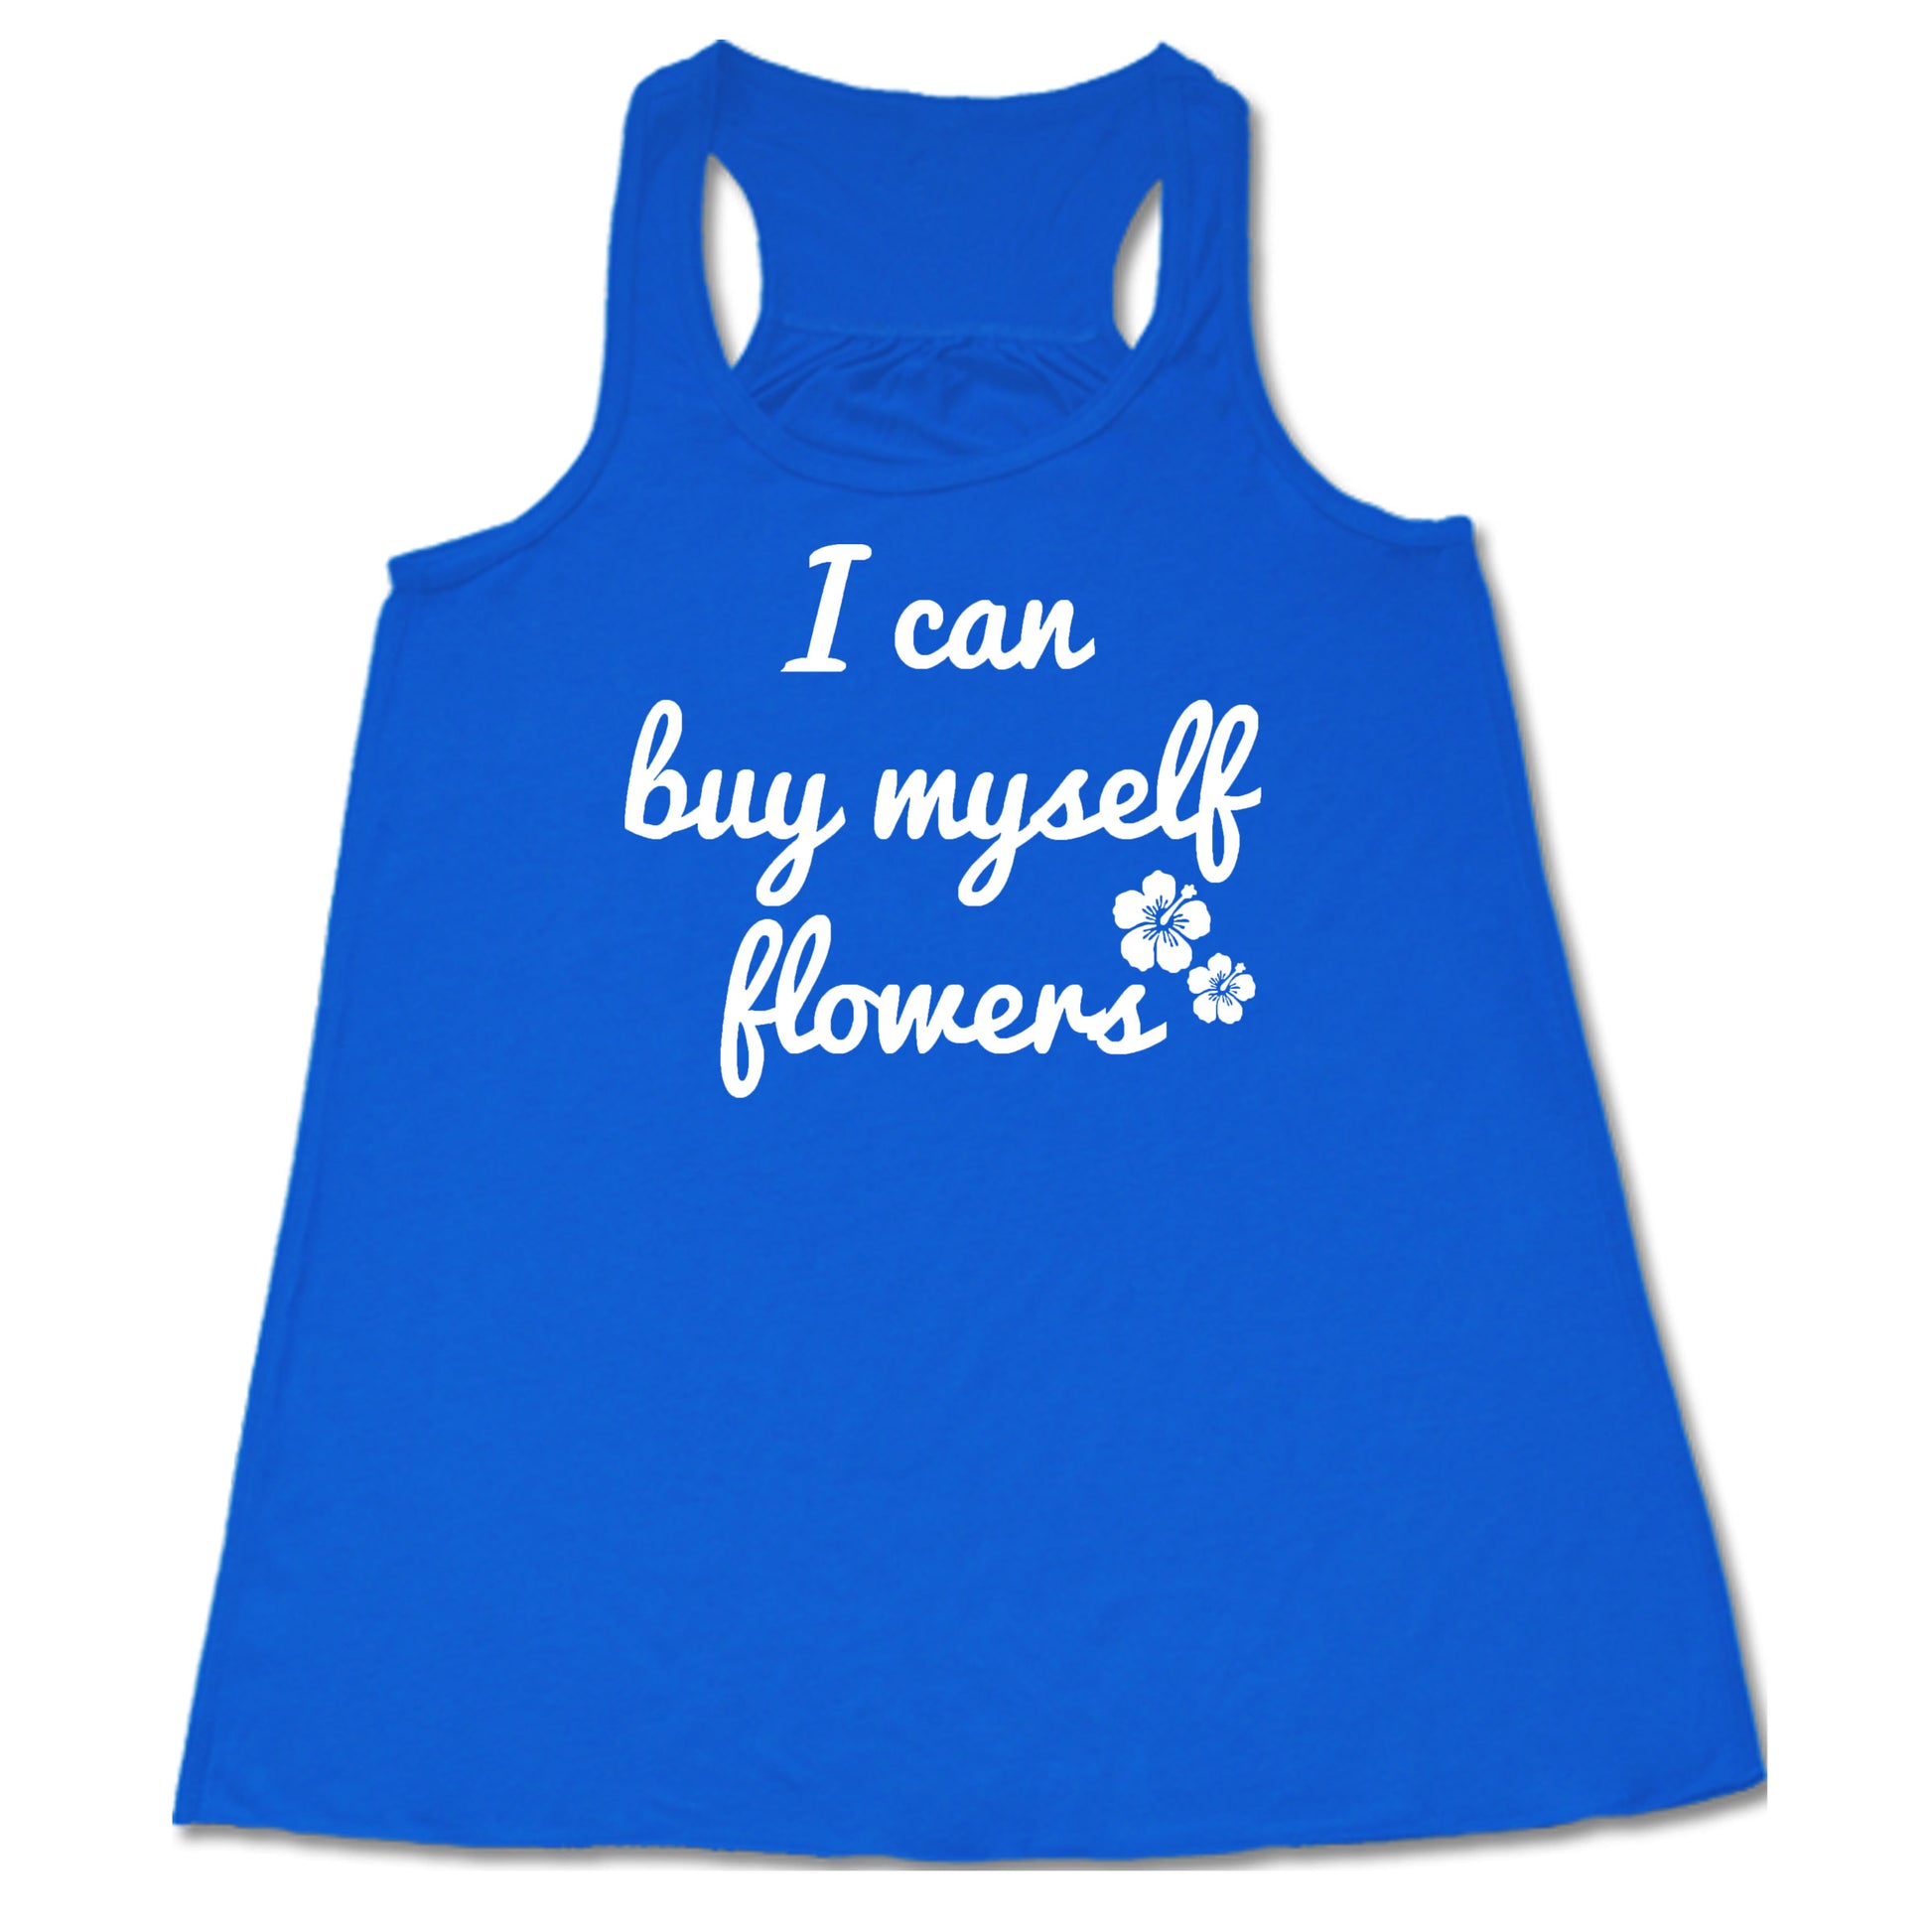 I Can Buy Myself Flowers blue racerback